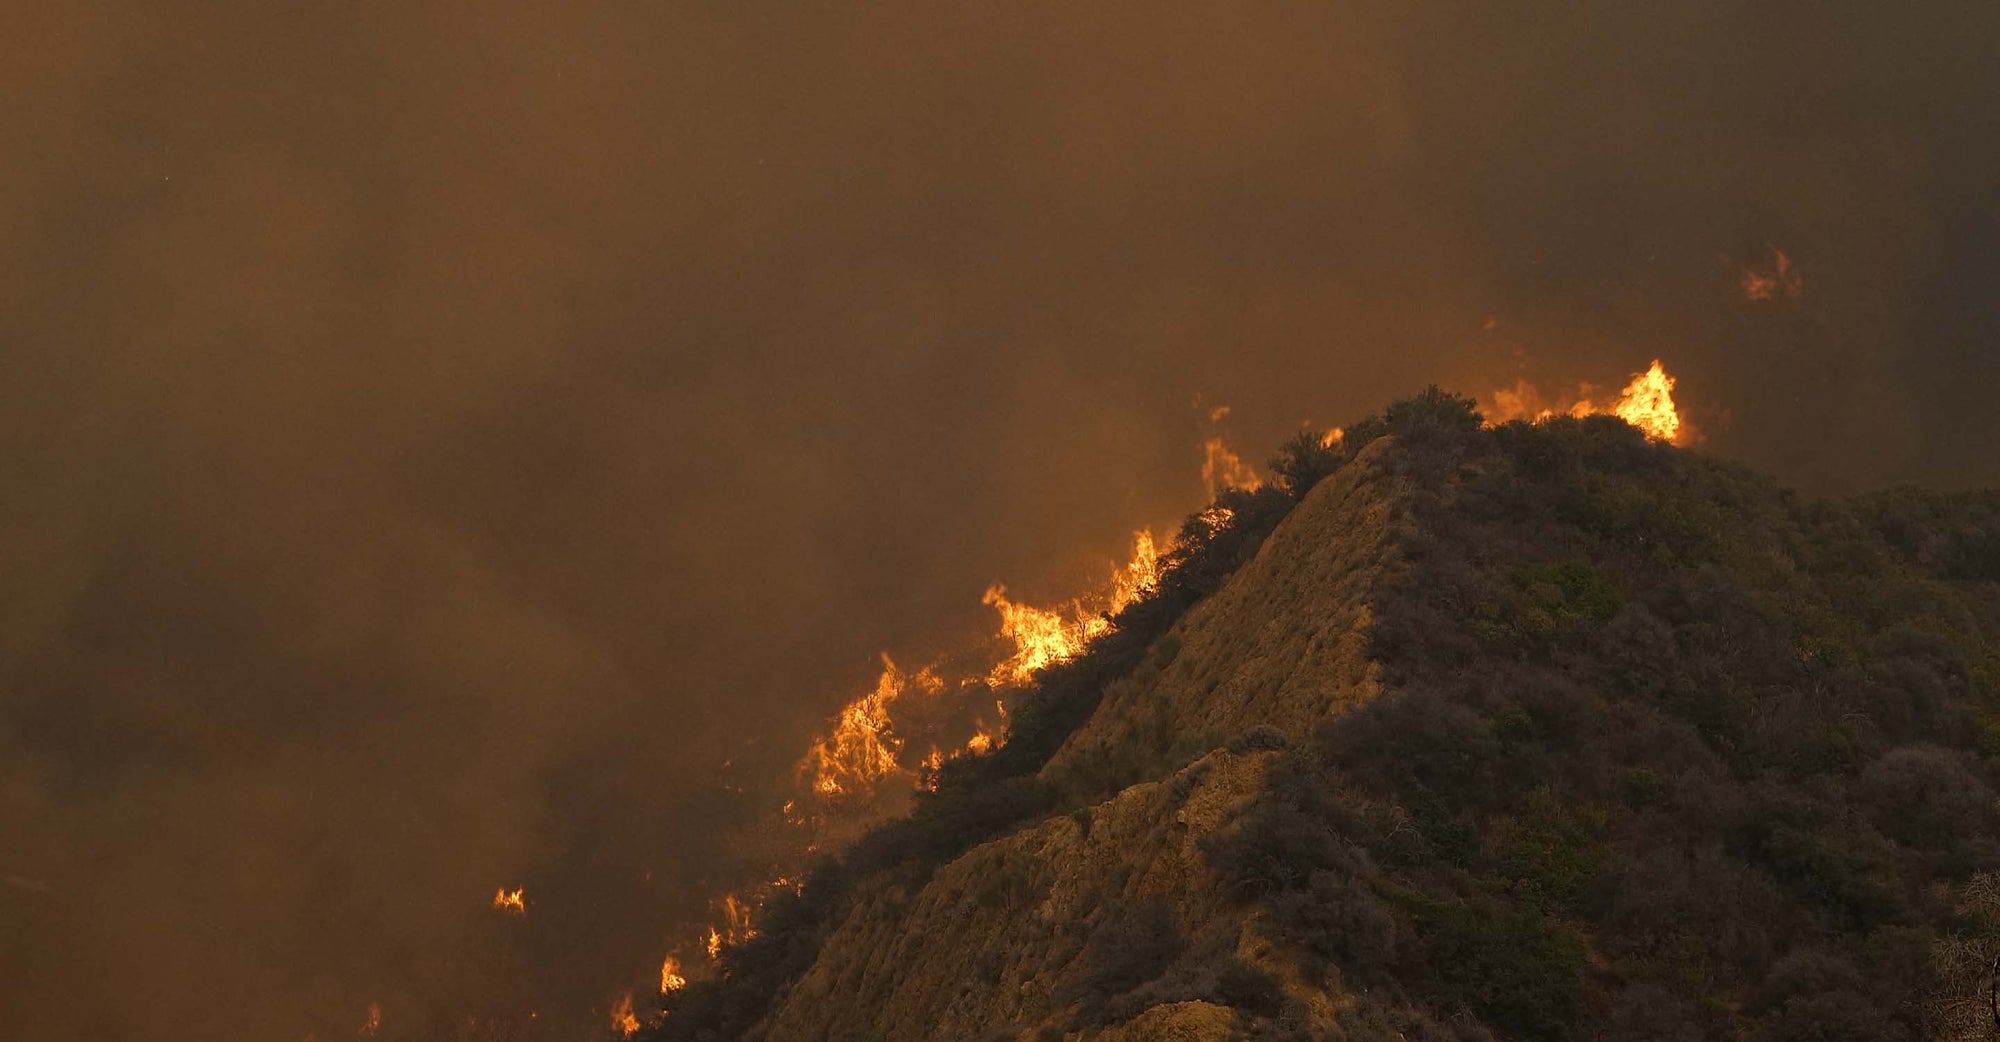 Fire burning on a hillside.